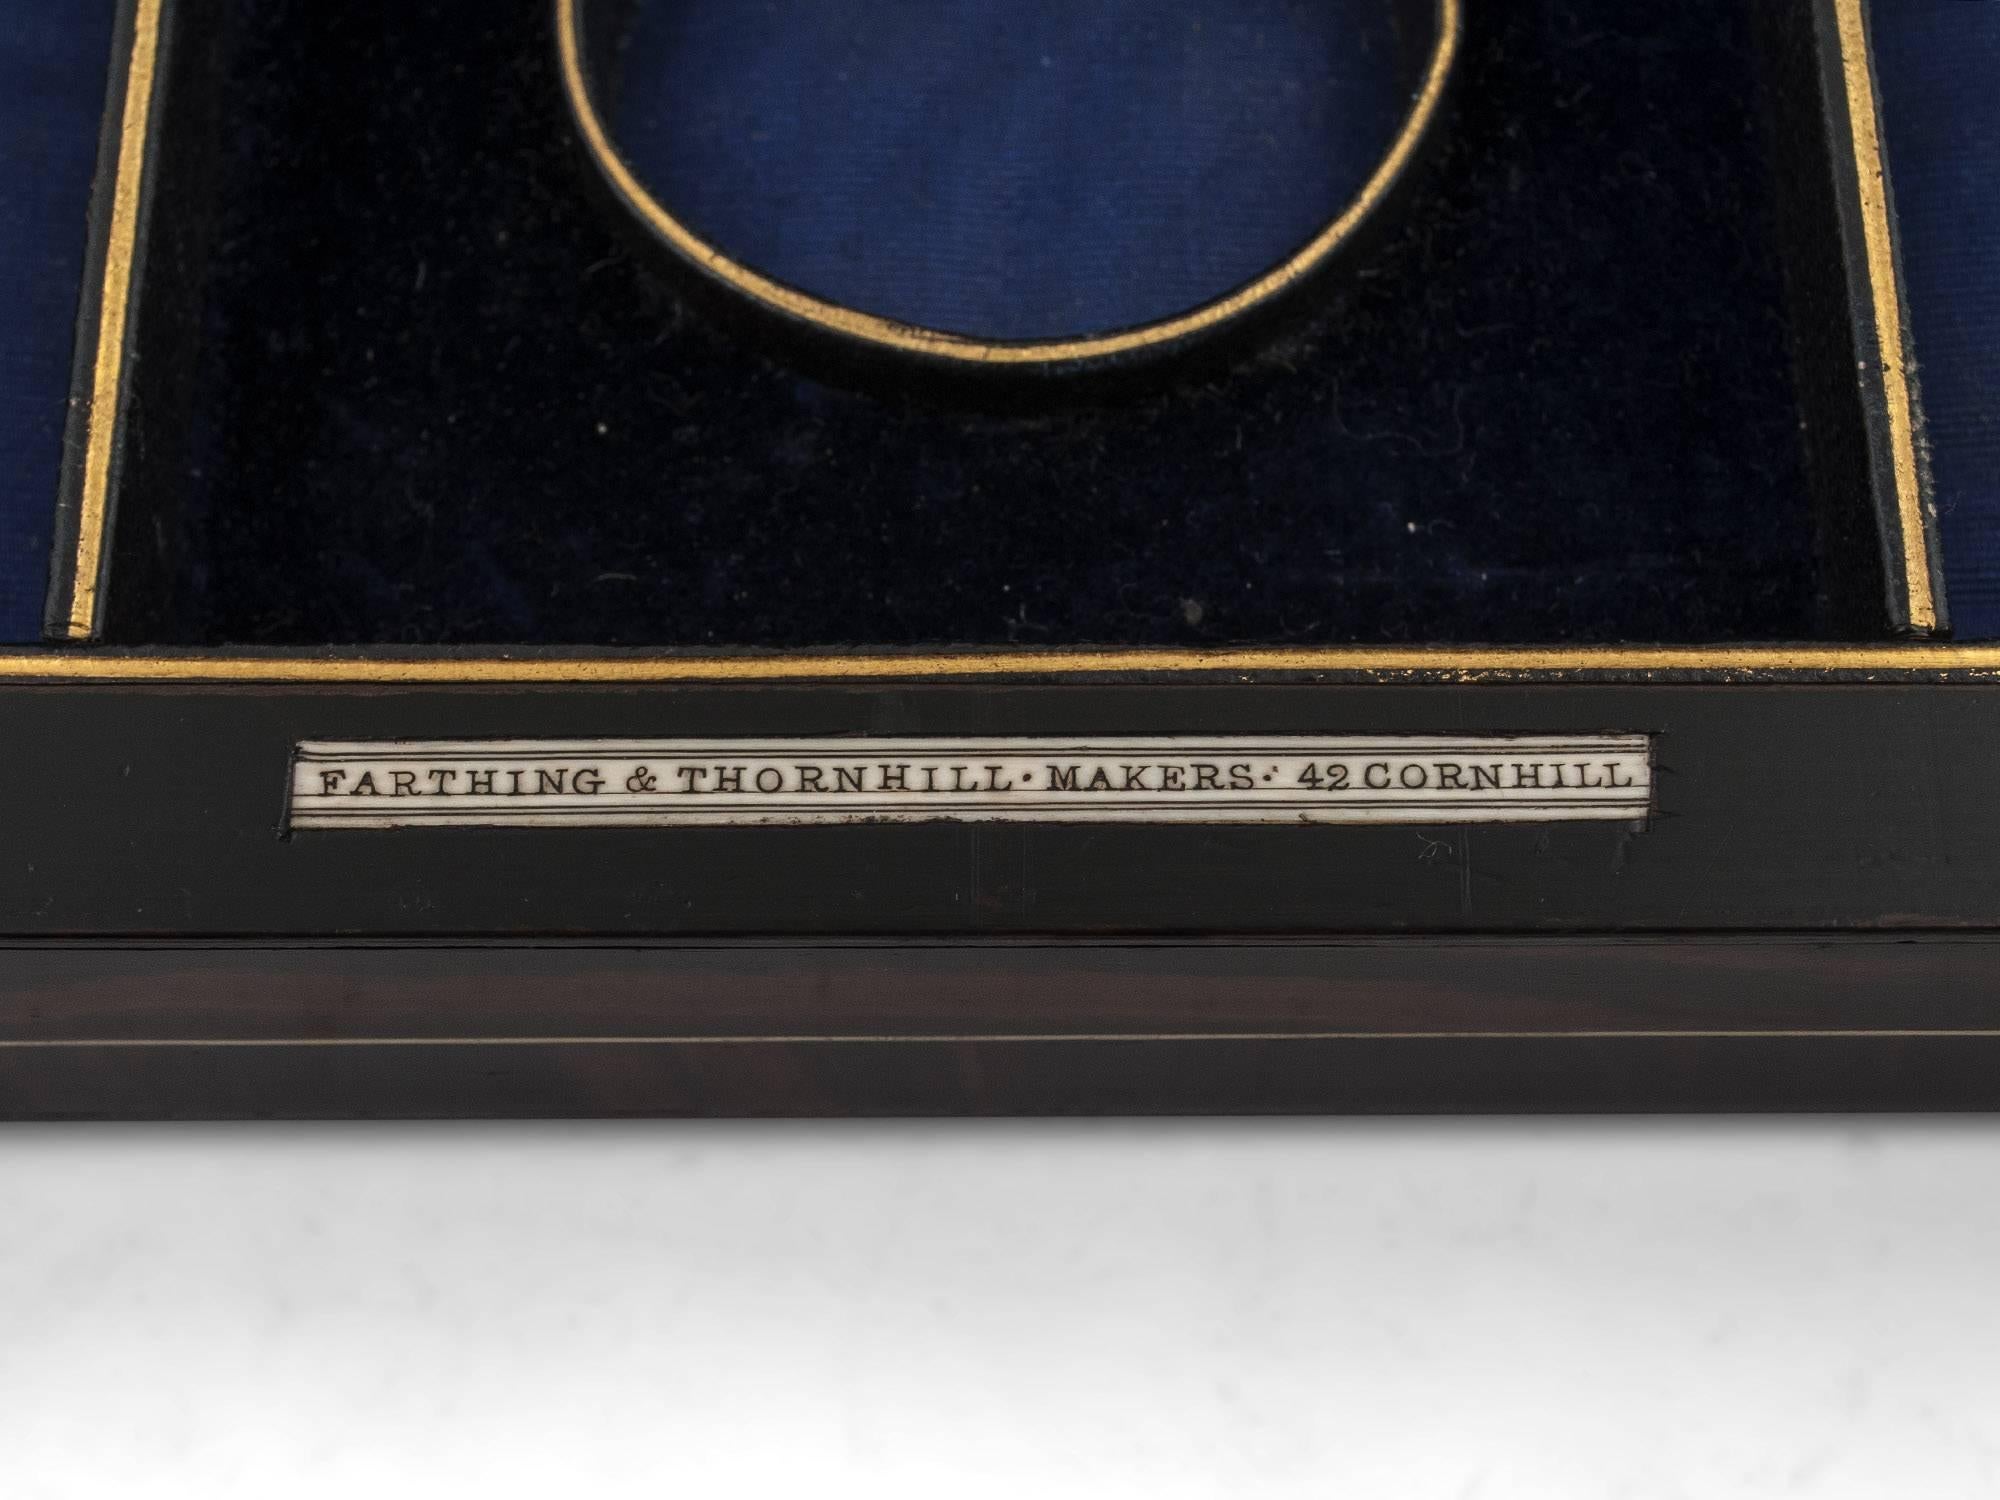 British Antique Coromandel Jewelry Box by Farthing & Thornhill, 19th Century